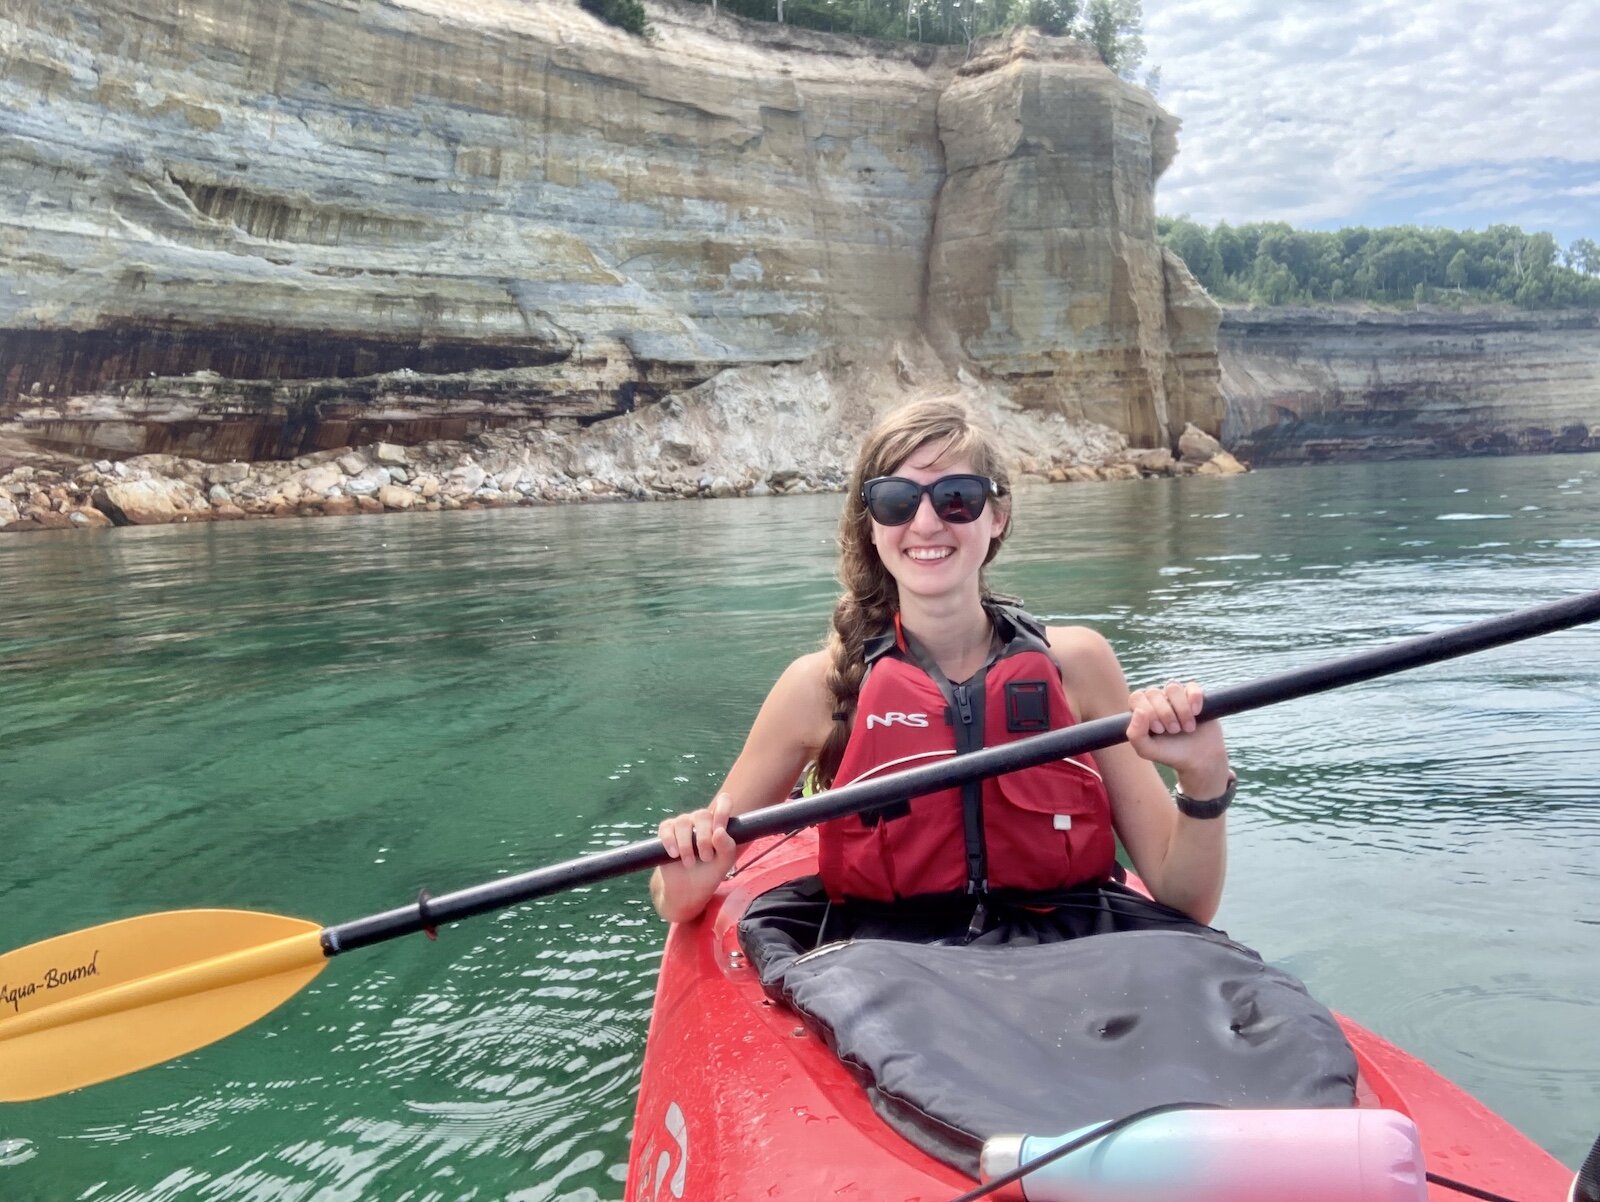 Full-time traveler Alexys Esslinger kayaks in Pictured Rocks National Lakeshore in Michigan.